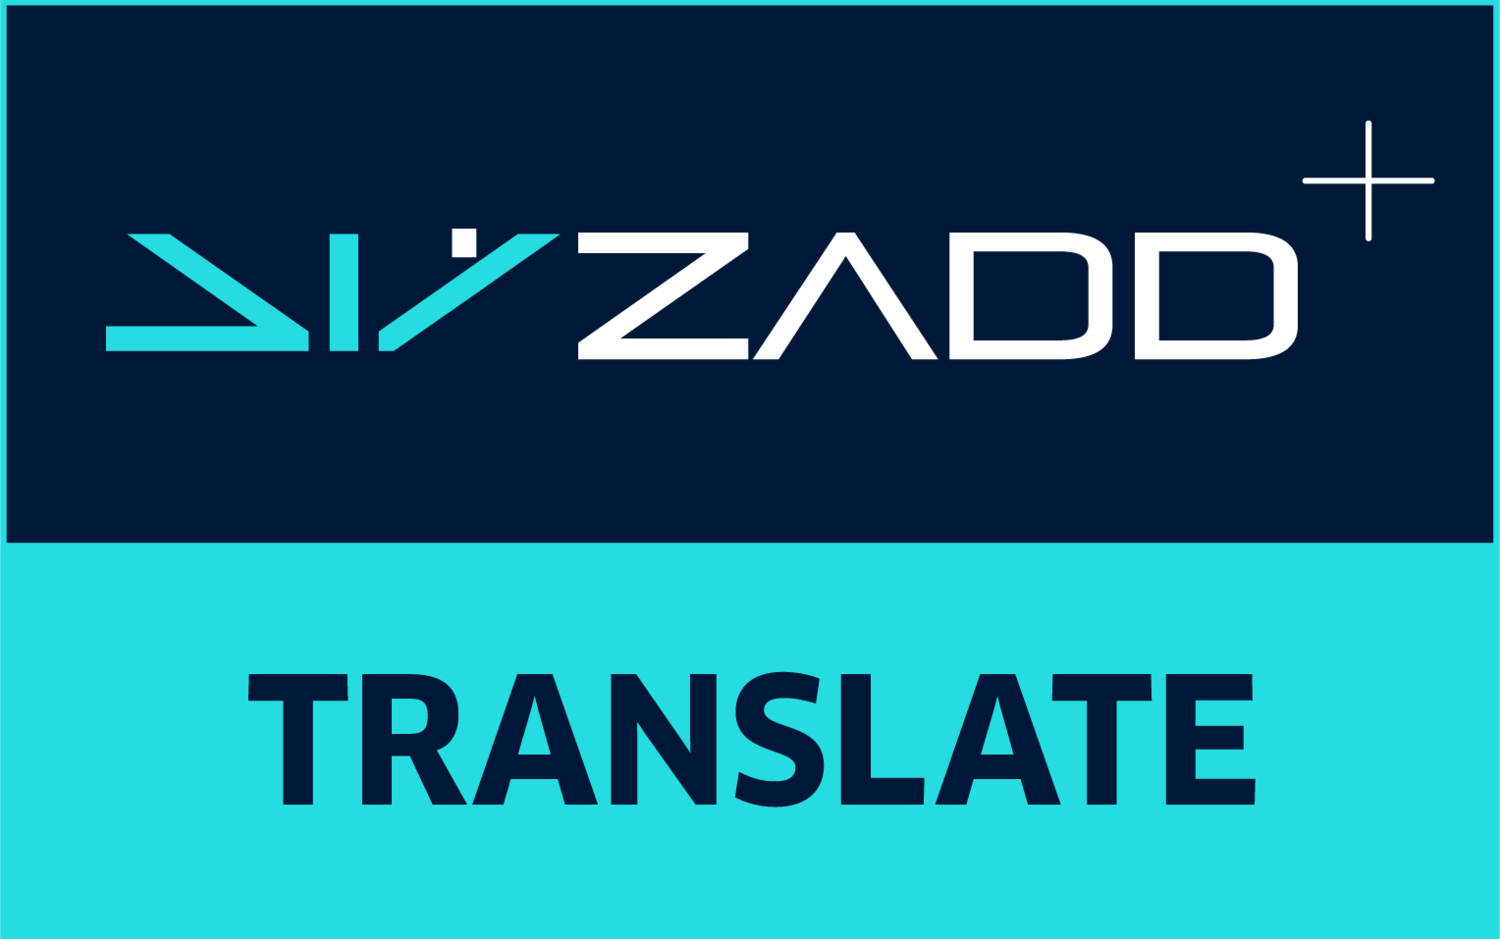 ZADD TRANSLATE